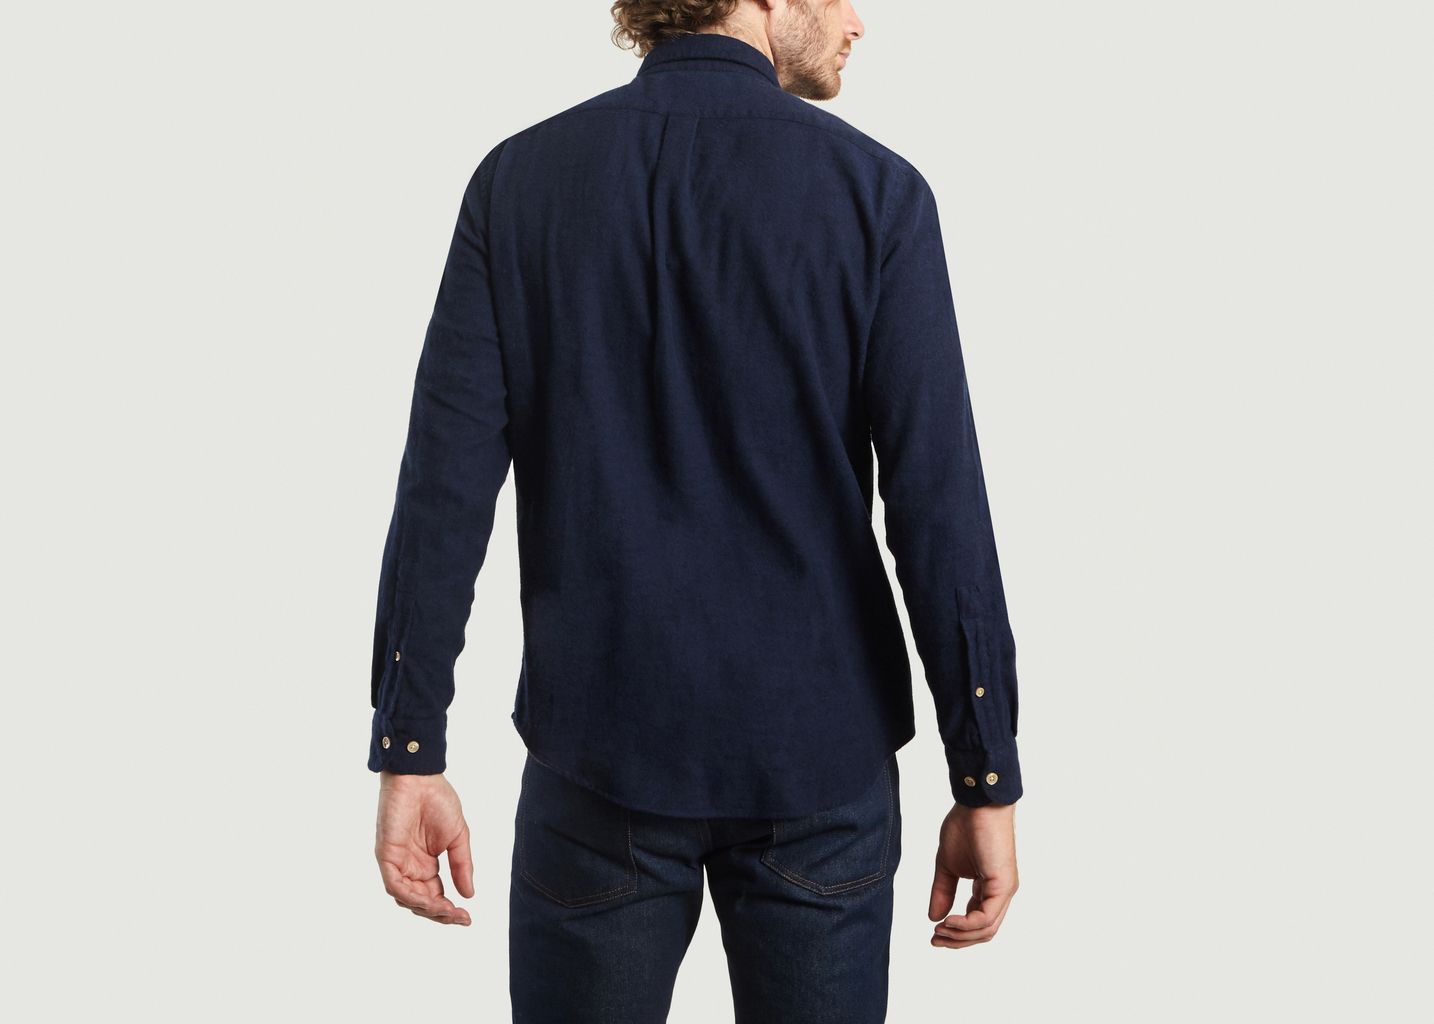 Teca Shirt - Portuguese Flannel